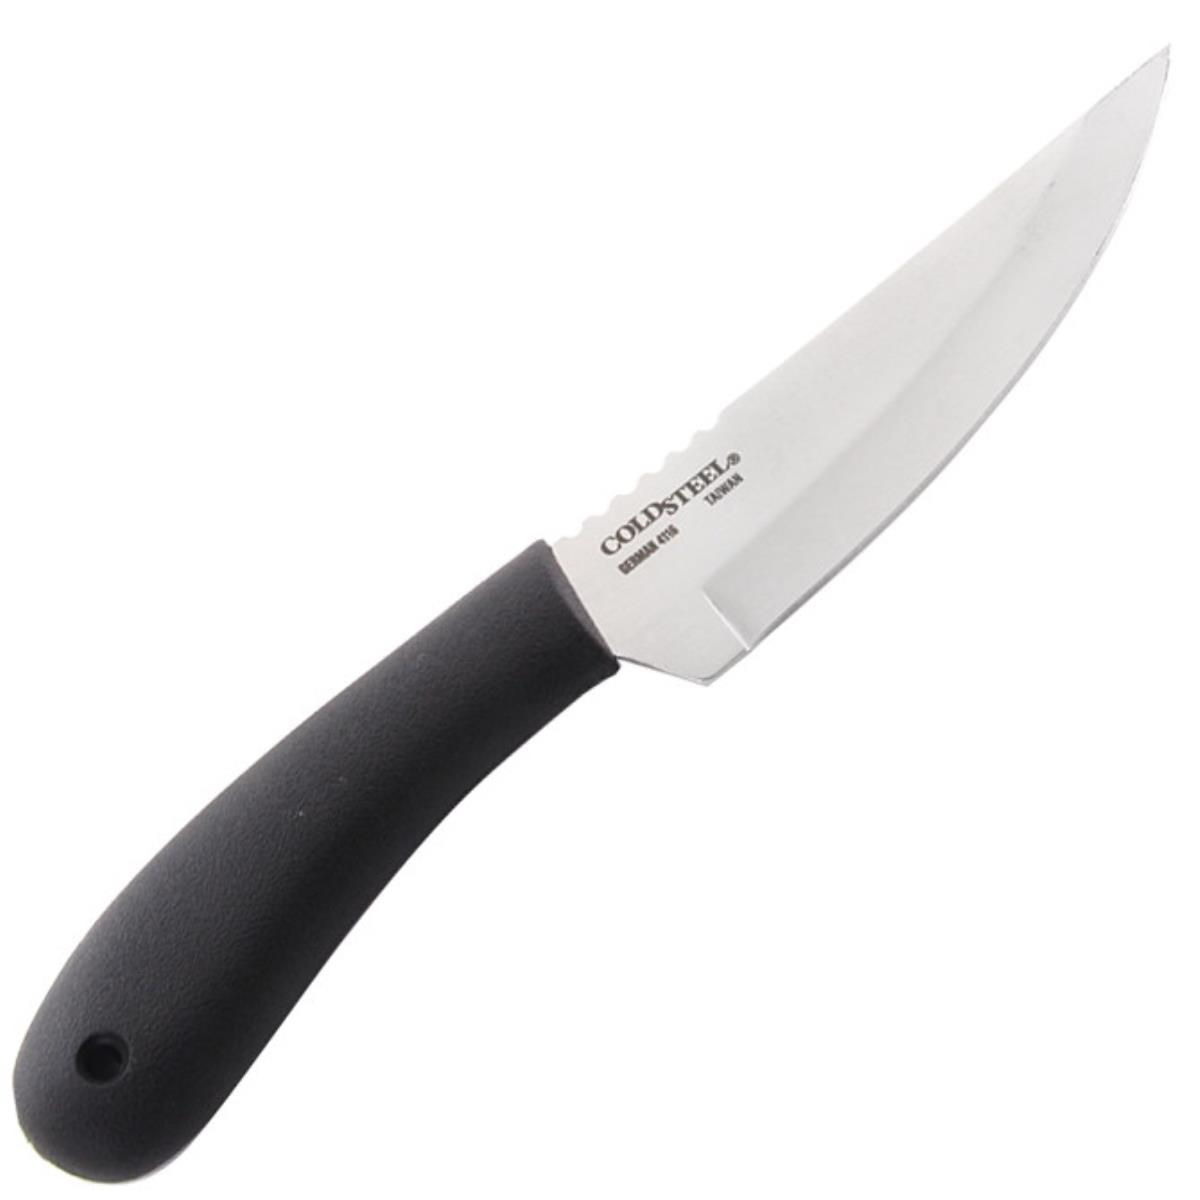 Нож сталь 4116 German, ножны пластик 20RBC Roach Belly Cold Steel складной нож crkt m40 03 сталь 1 4116 рукоять термопластик grn